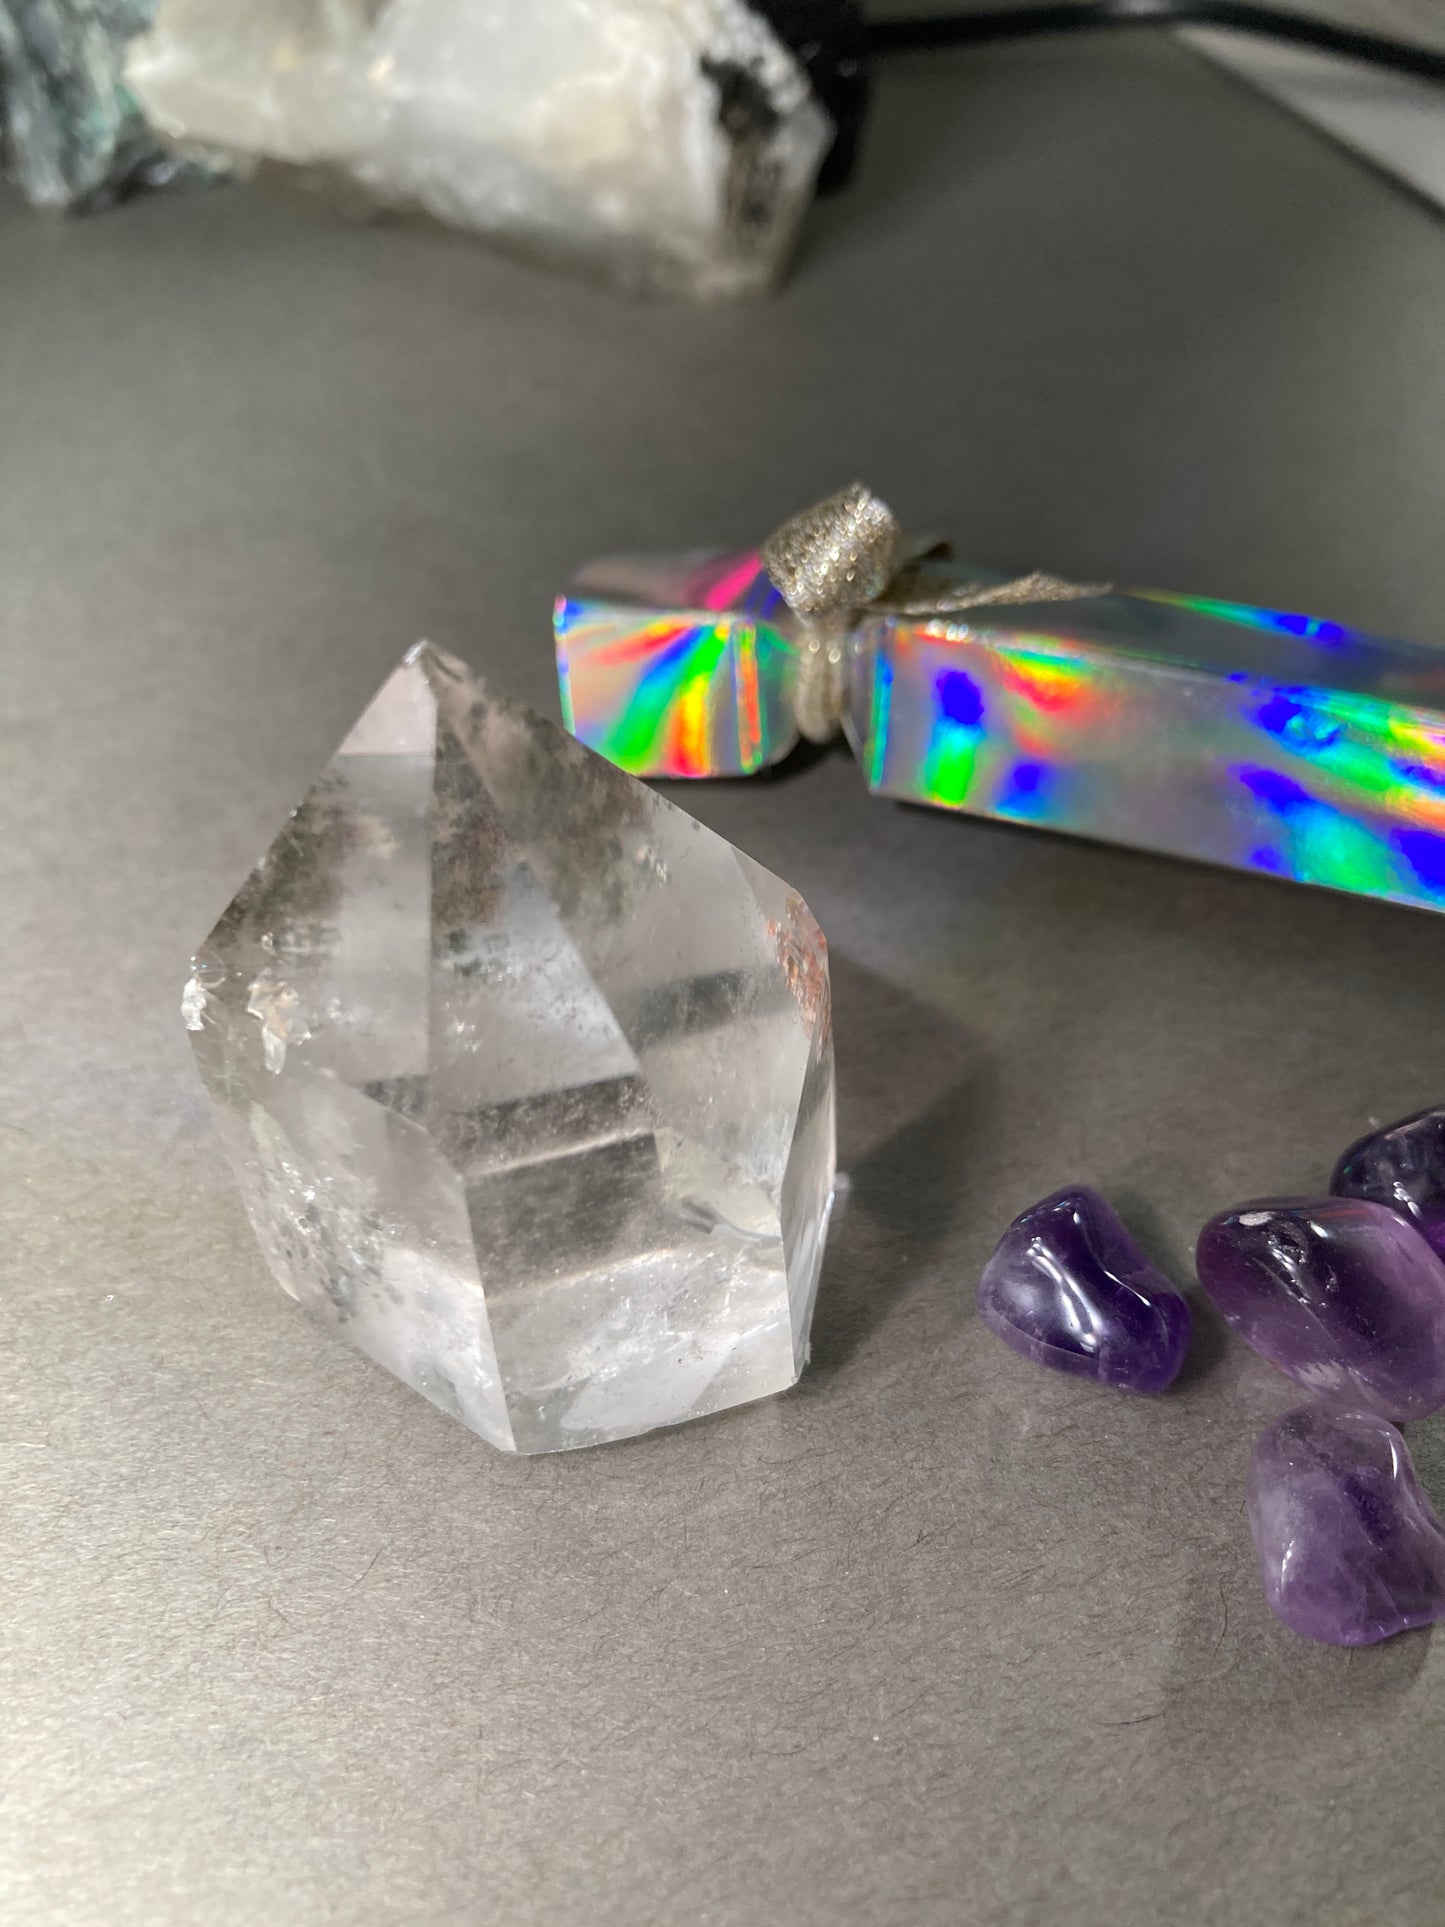 Cut Clear Quartz Crystal Point